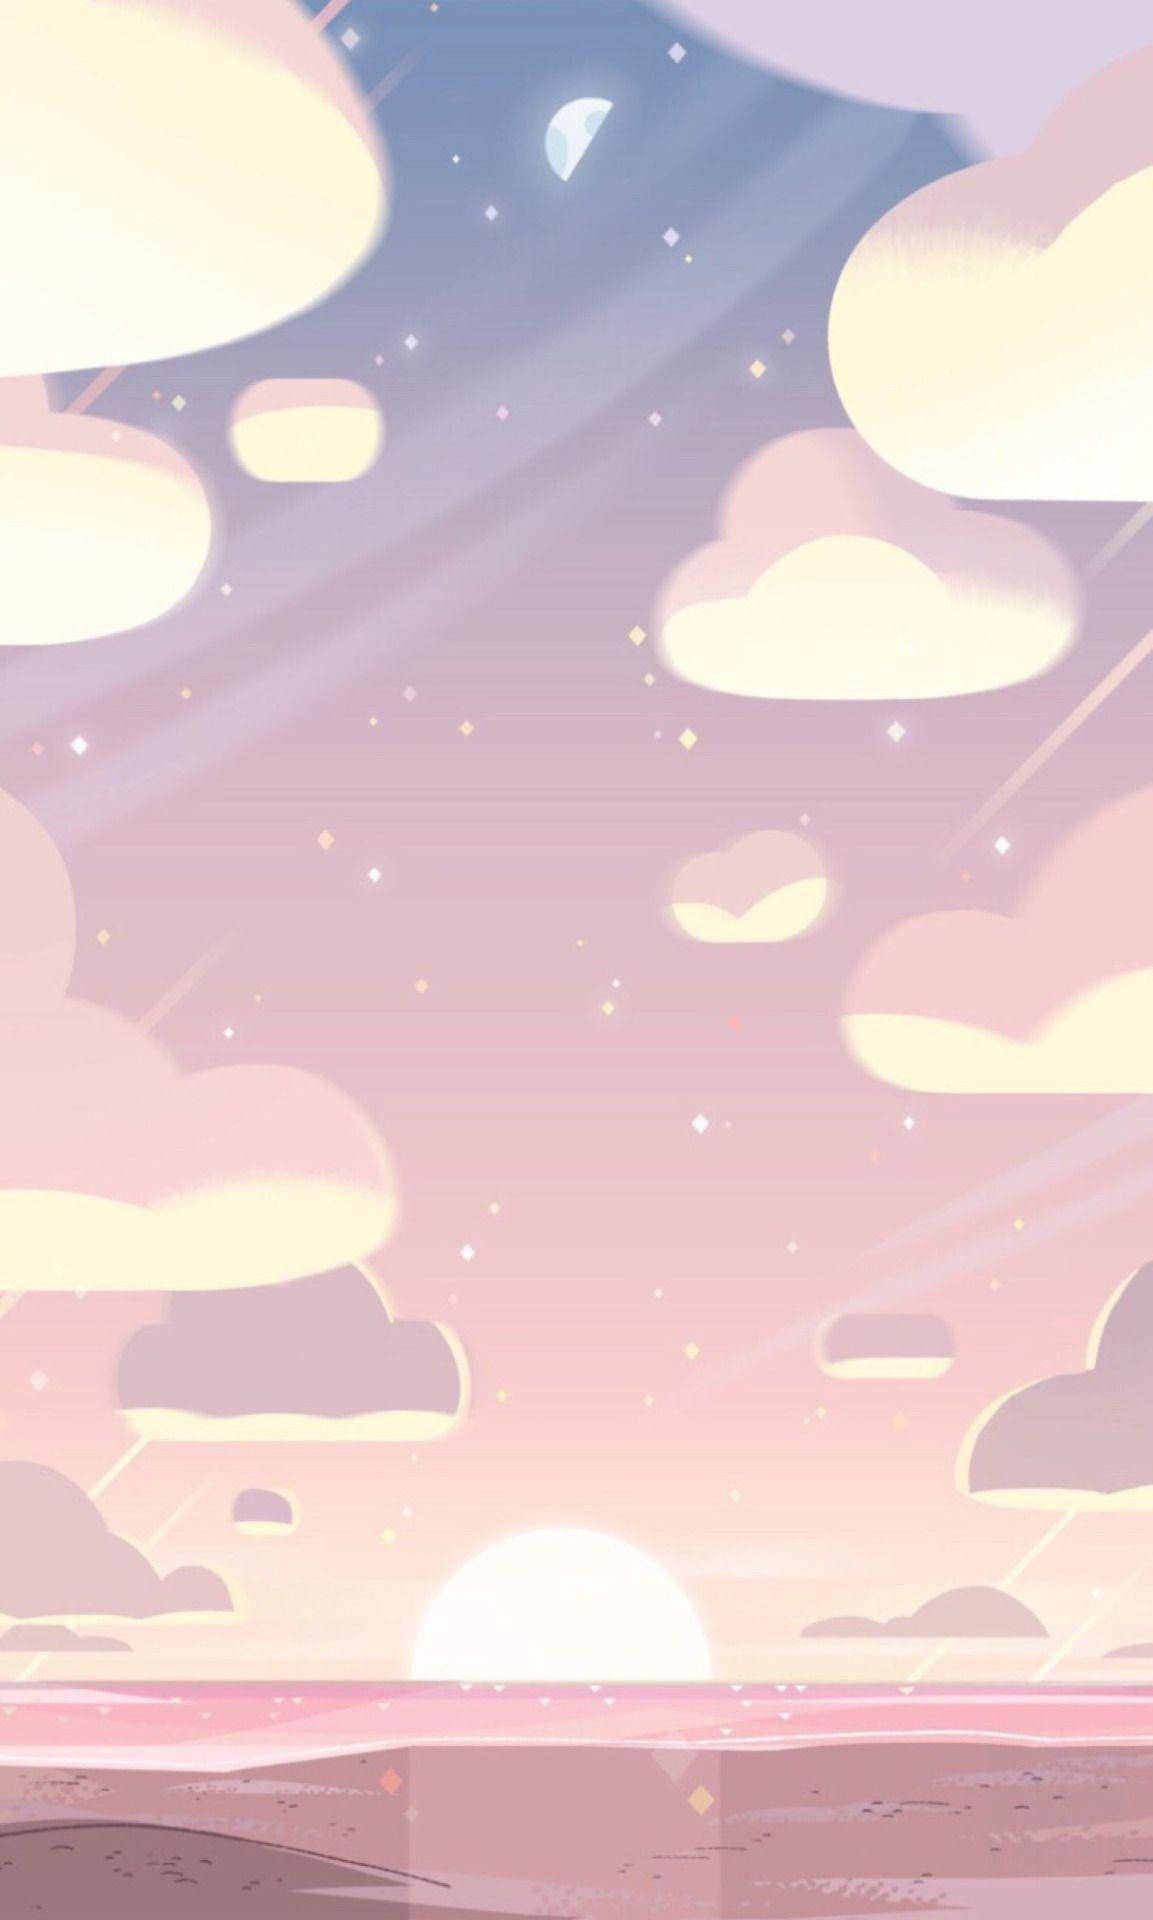 Steven Universe Sunset Cute Tablet